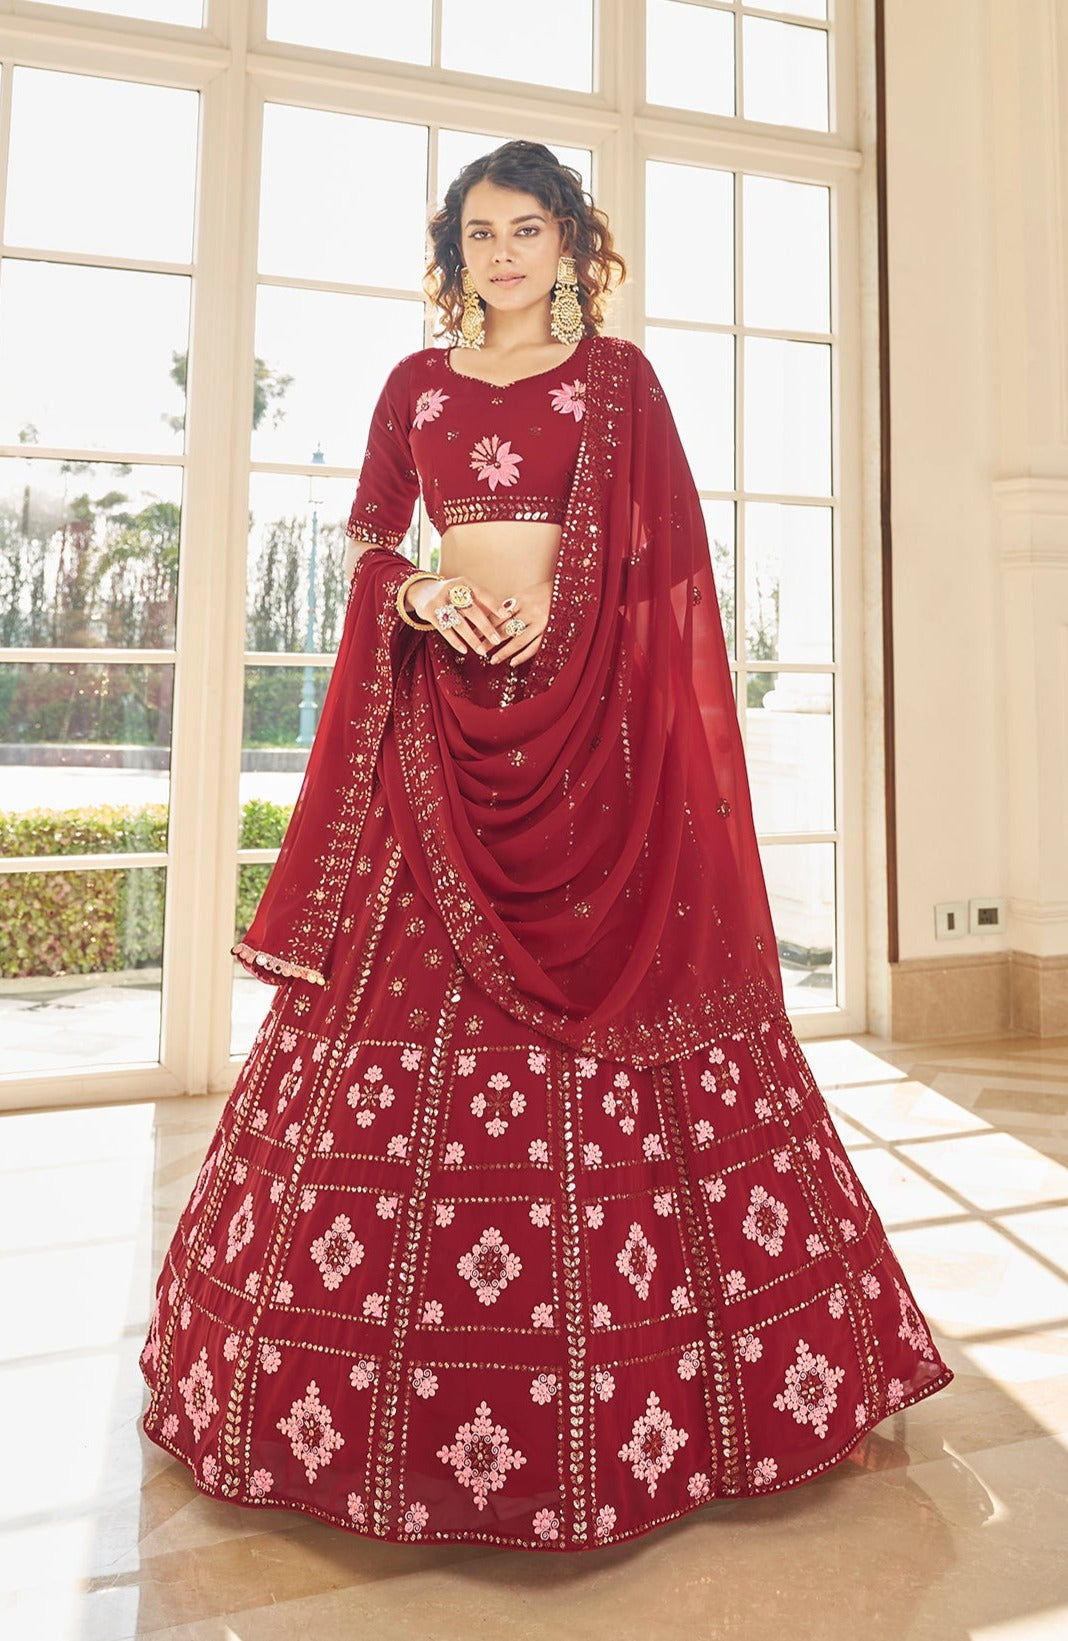 Lehengas | Beautiful Pink Indian Wedding Guest Dress Lehenga Type Dress |  Poshmark